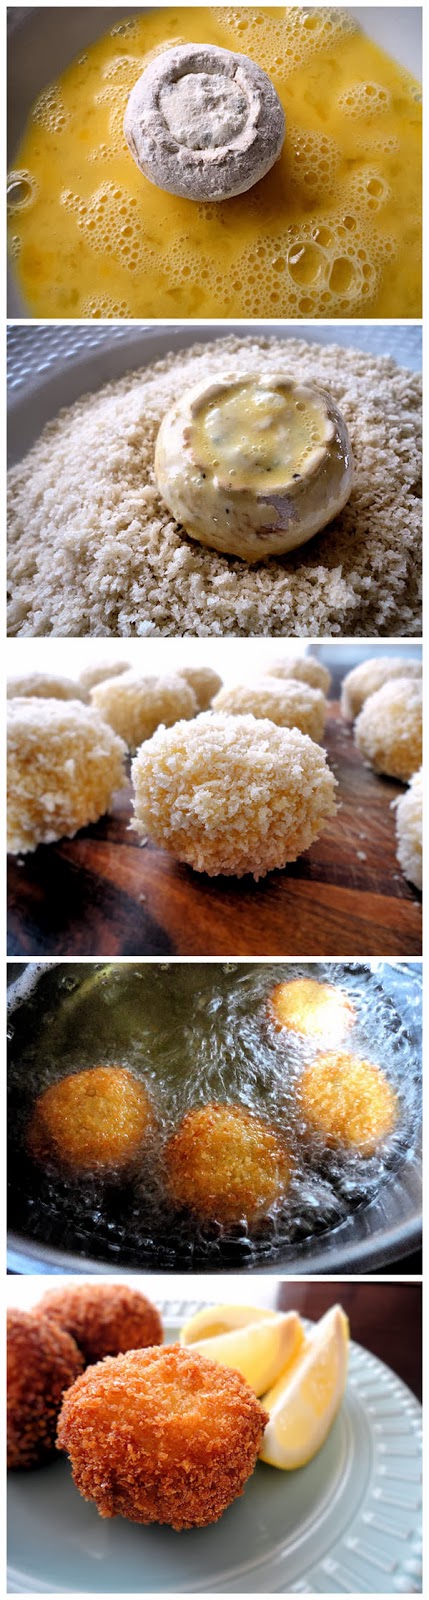 Fried-Stuffed-Mushrooms-Recipe